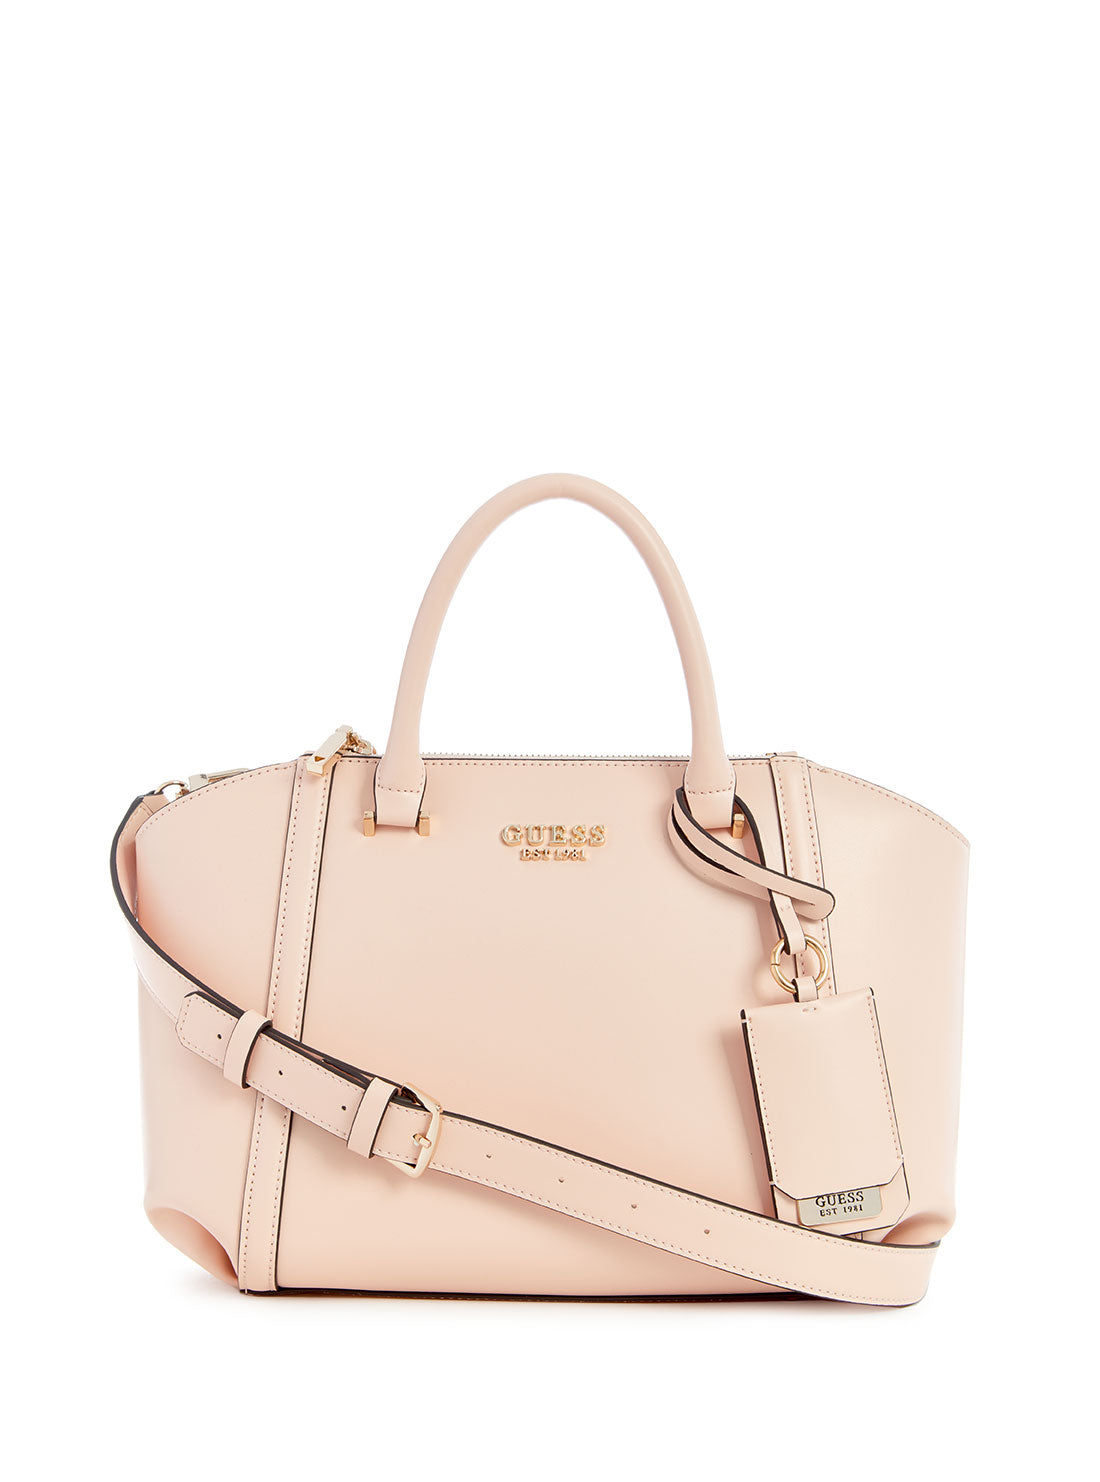 Pale Pink Leie Status Satchel Bag | GUESS Women's Handbags | front view